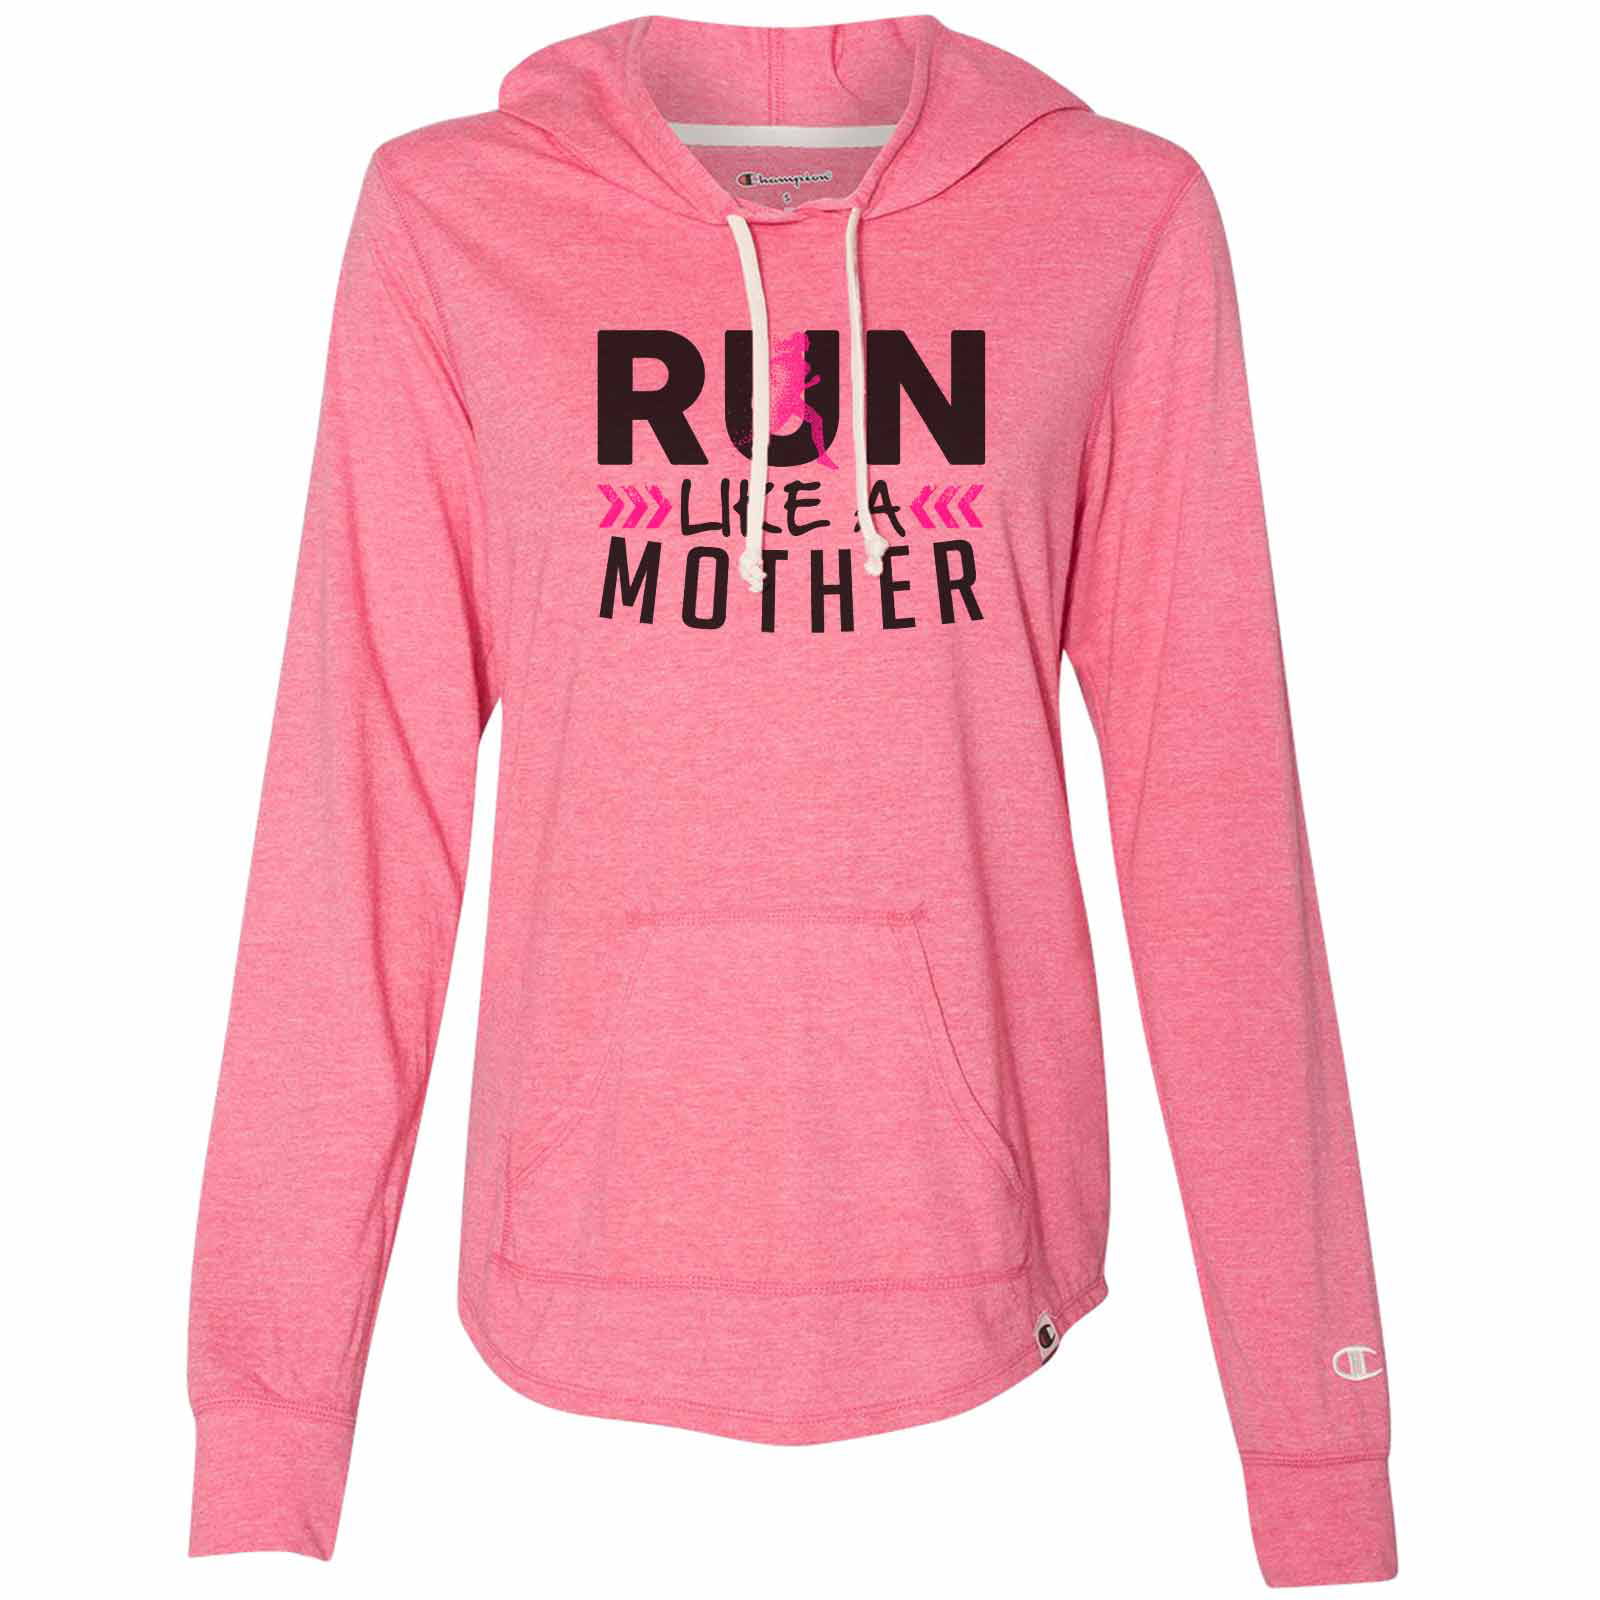 pink womens champion hoodie